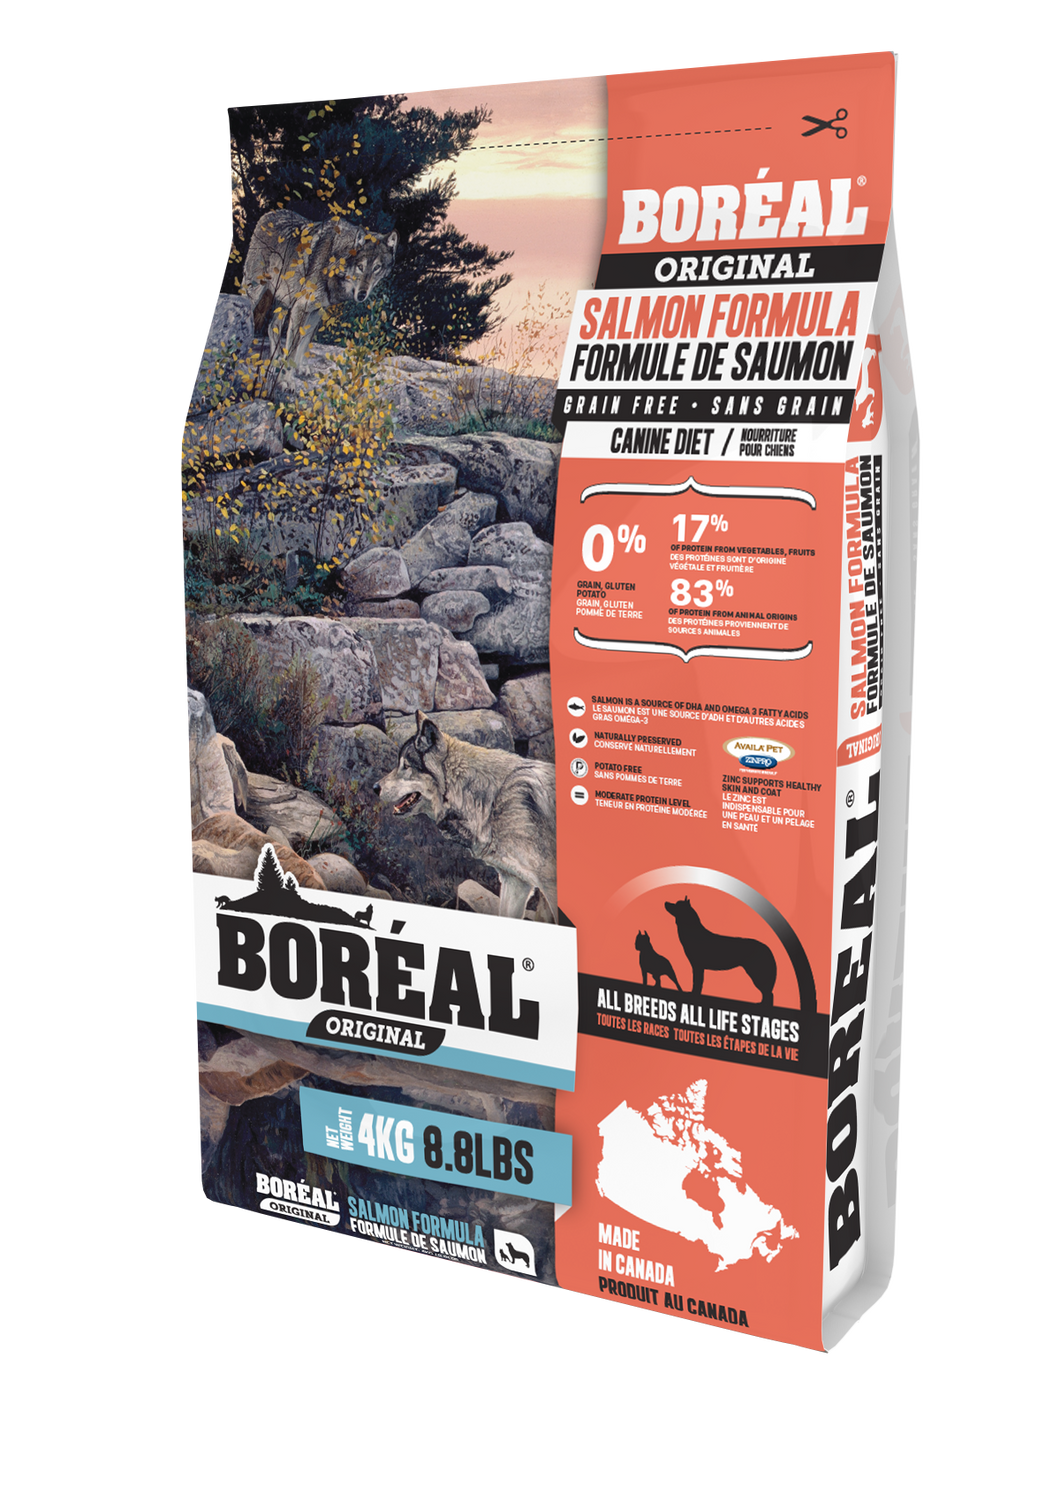 Boréal - Original Salmon Grain Free Dog Food - All Breed - North American Minerals - Naturally Preserved - Atlantic Salmon - Made in Canada